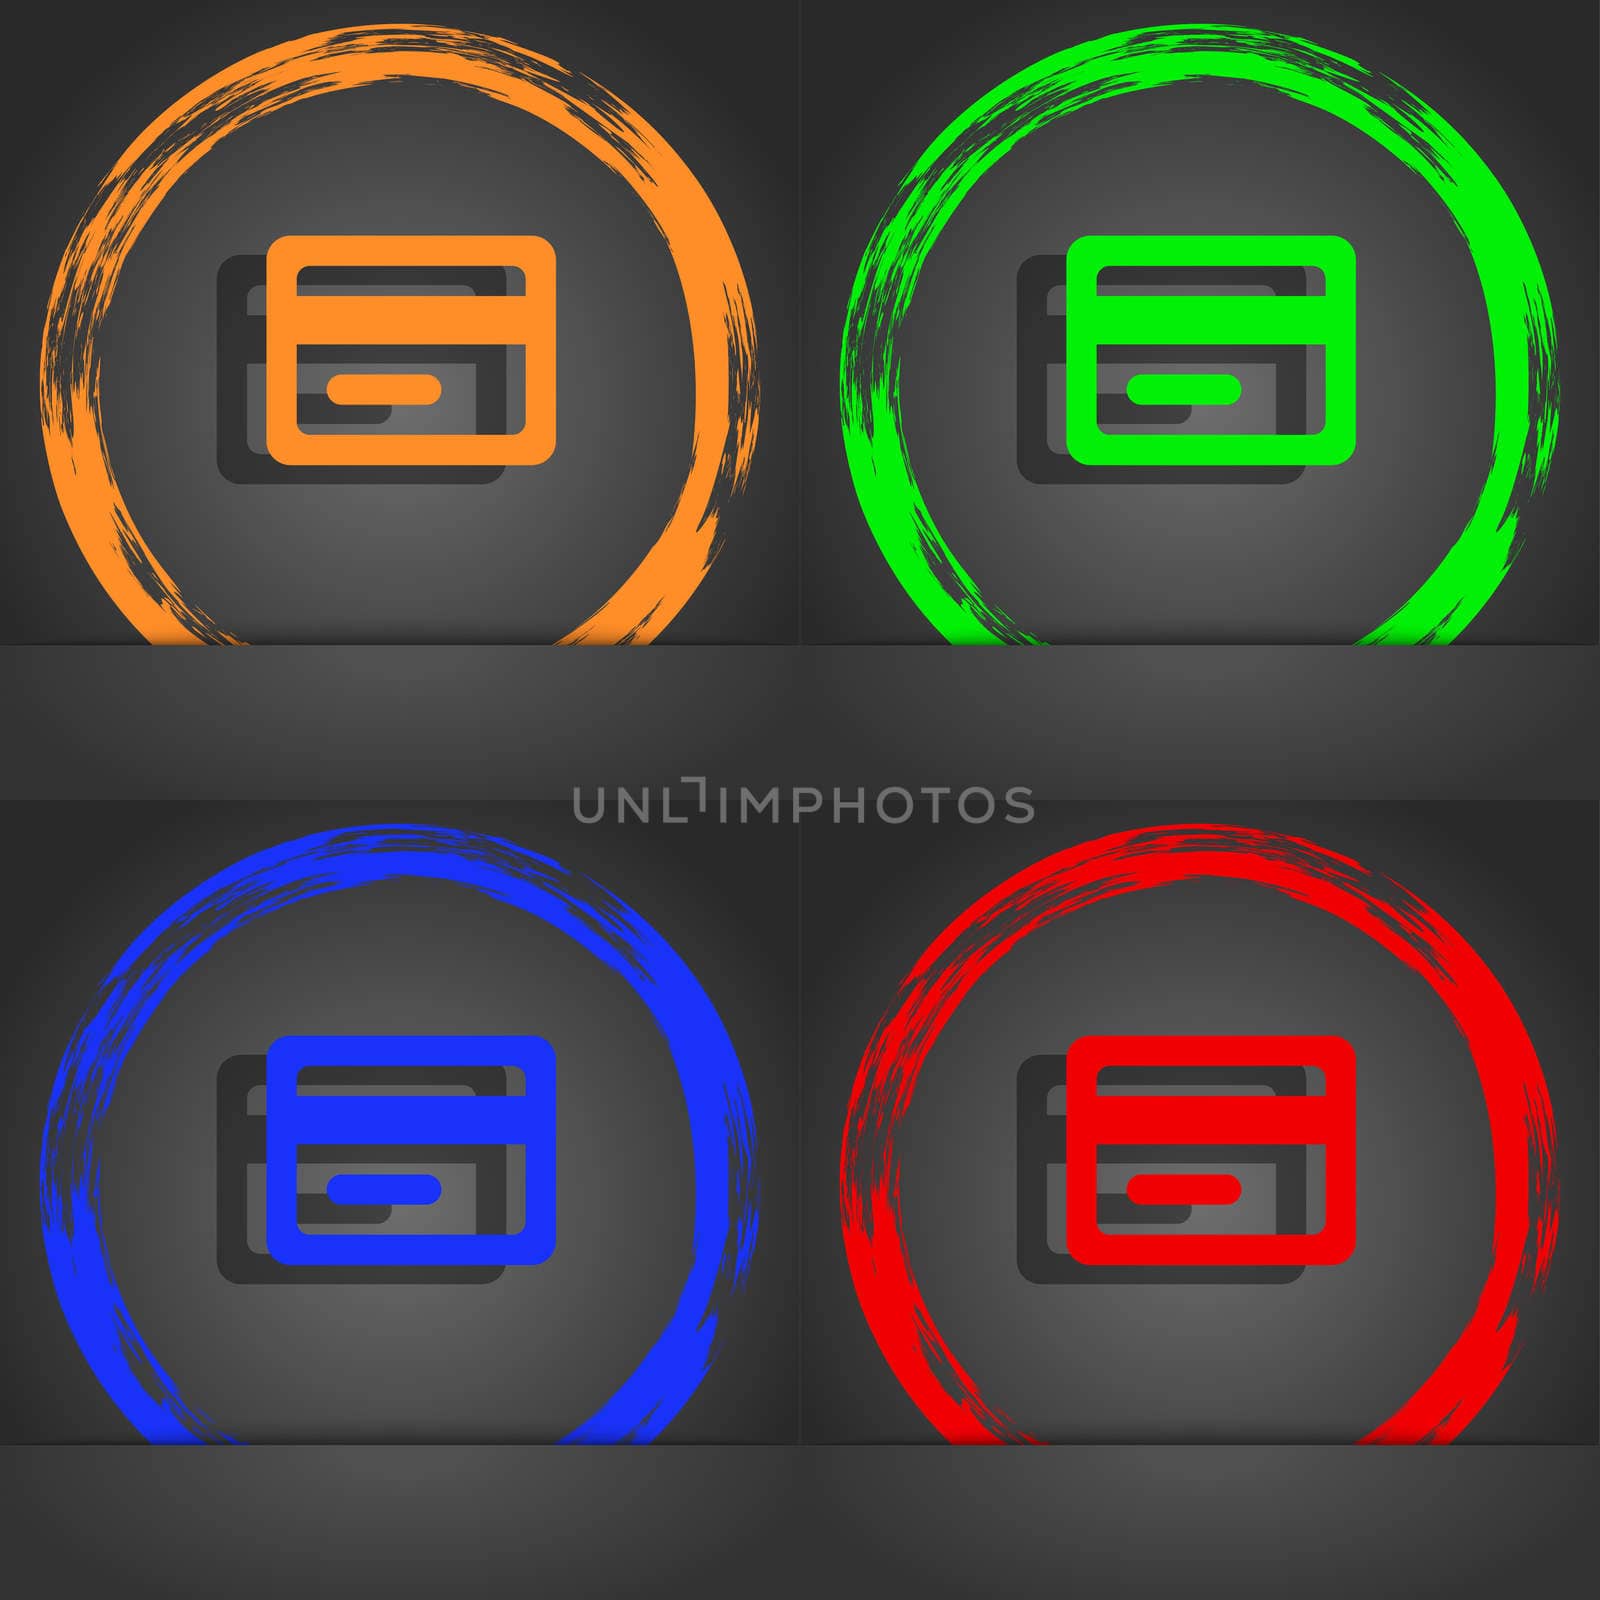 credit card icon symbol. Fashionable modern style. In the orange, green, blue, green design. illustration